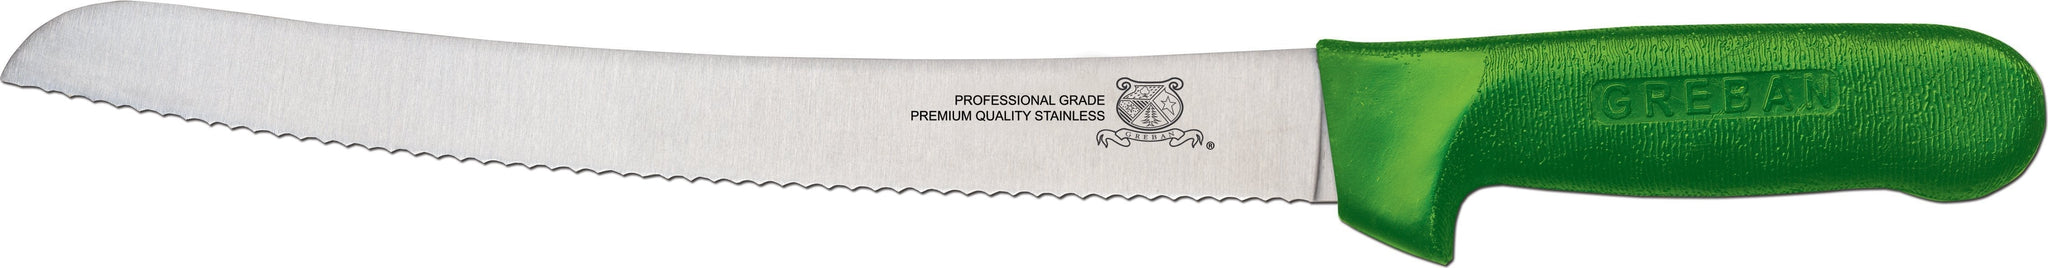 Omcan - 10” Curved Slicer Knife with Green Polypropylene Handle, 15/cs - 12827